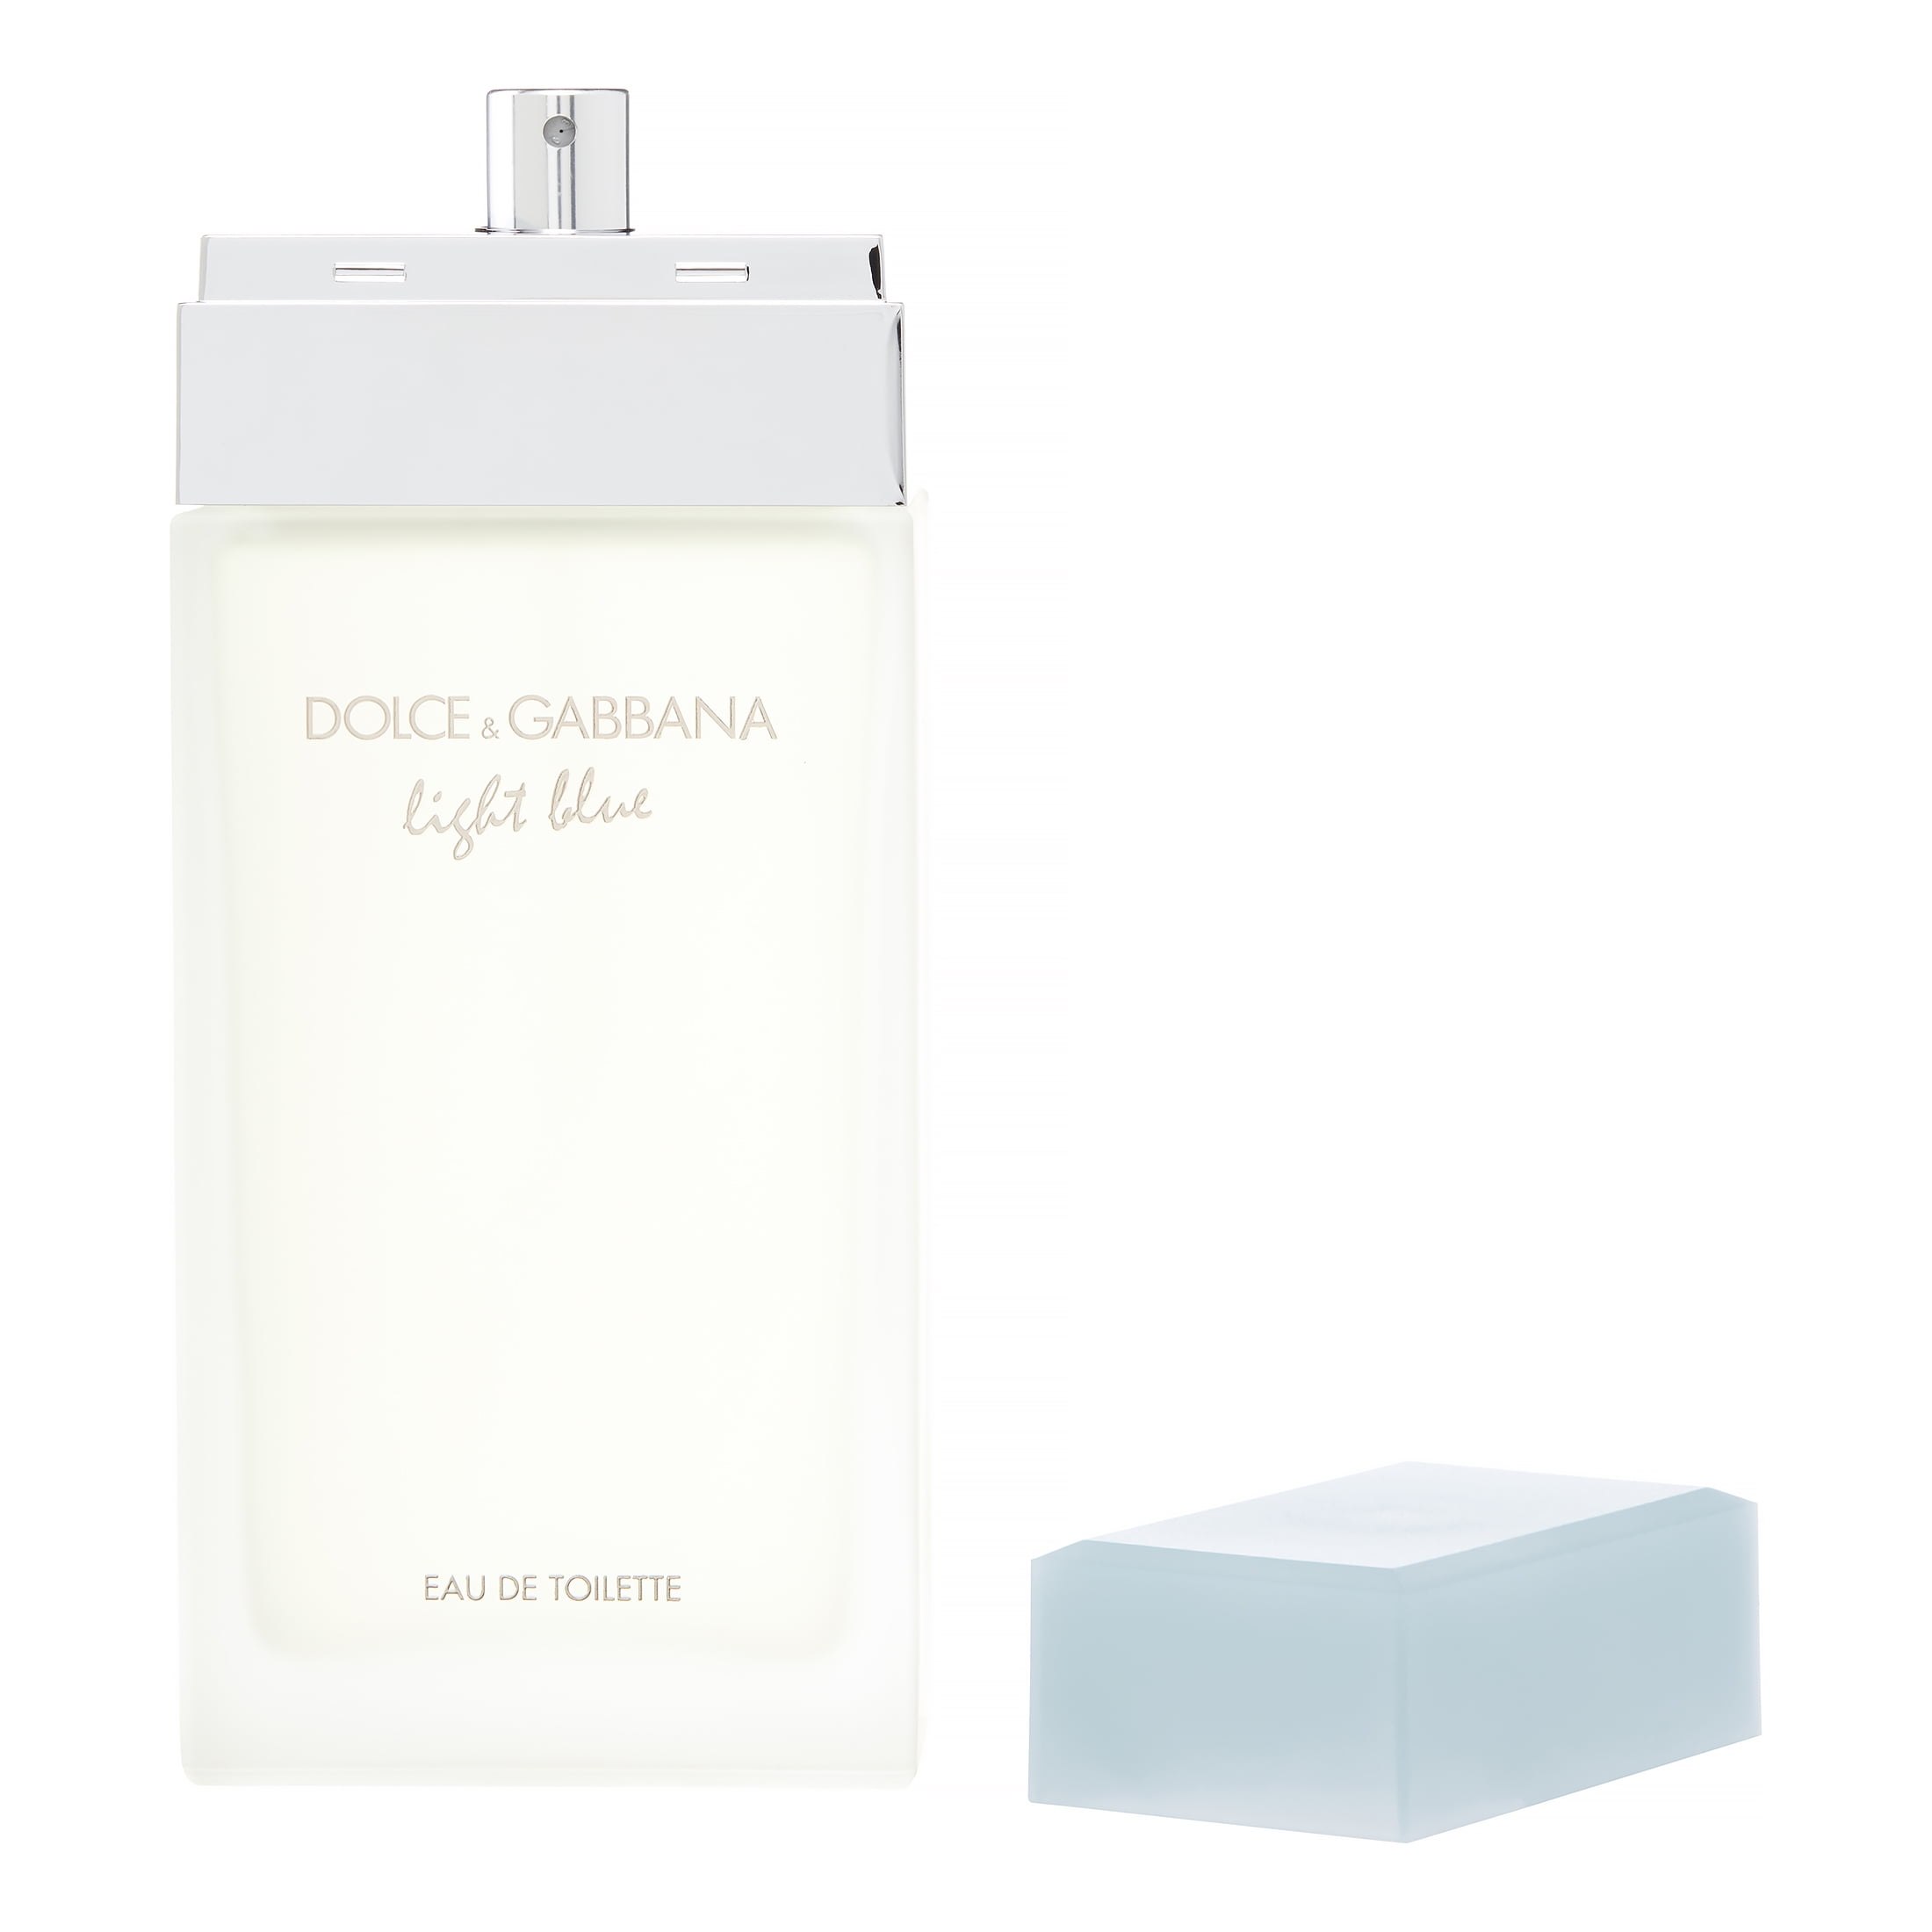 Light Blue by Dolce & Gabbana for Women - 6.7 oz EDT Spray